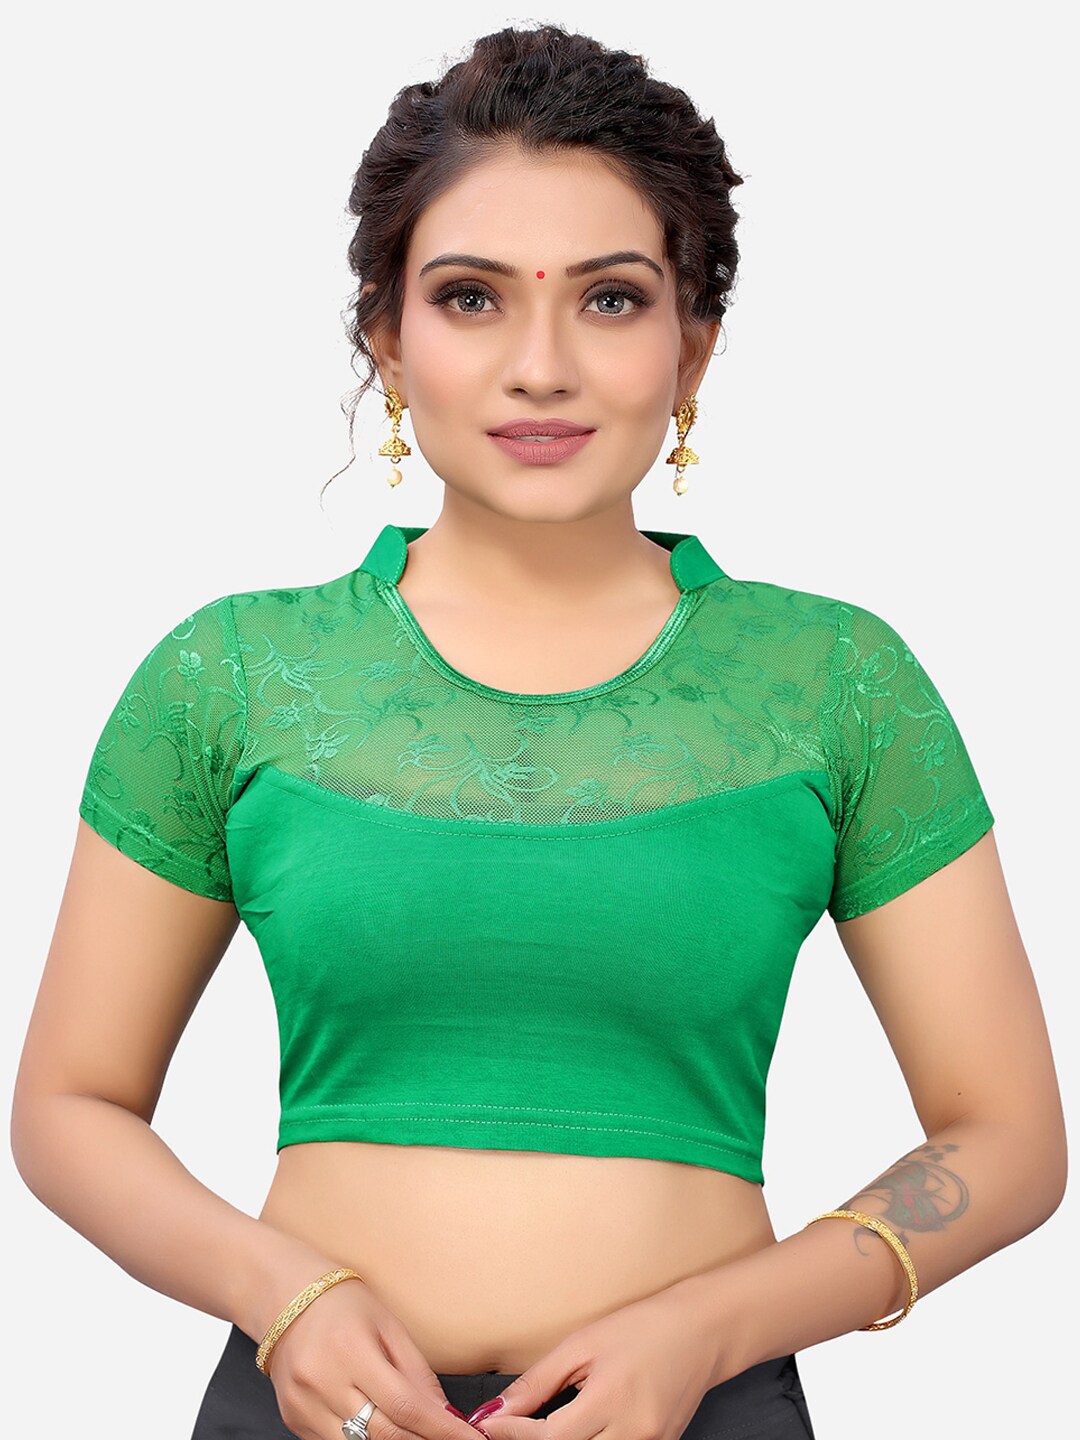 SIRIL Women Green Woven Design Saree Blouse Price in India